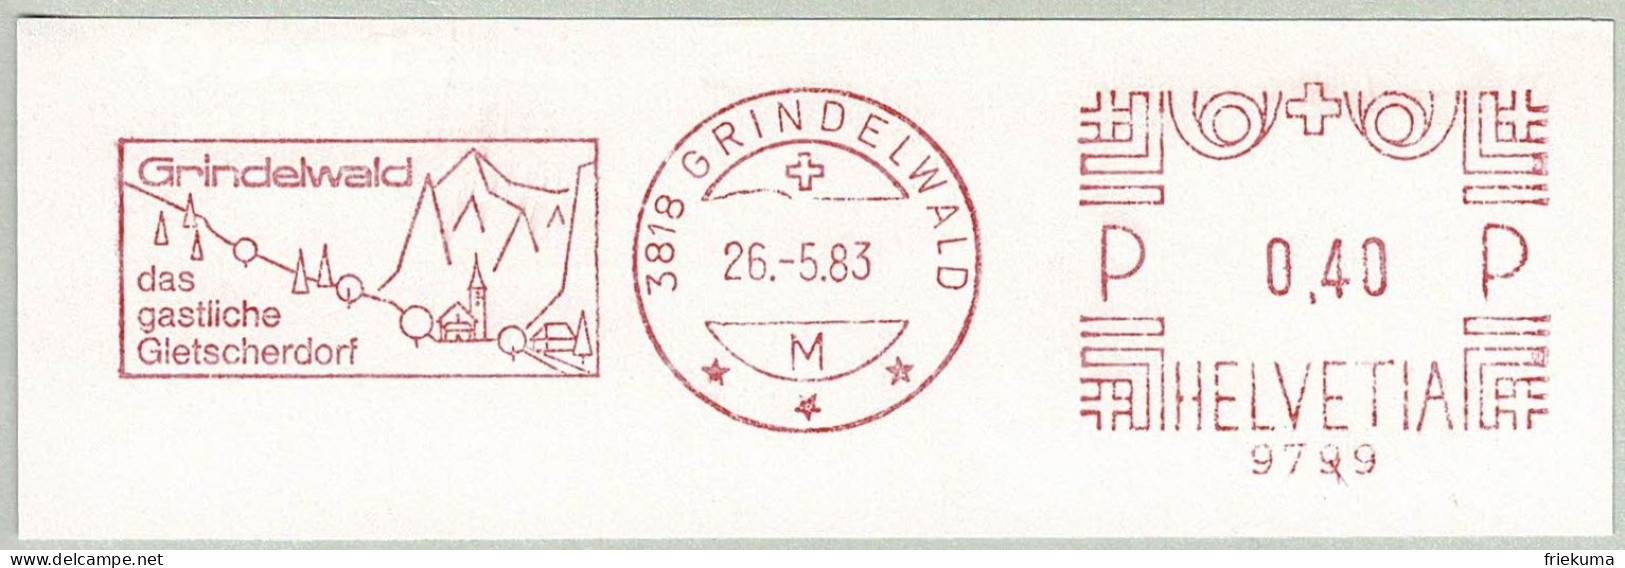 Schweiz / Helvetia 1983, Freistempel / EMA / Meterstamp Grindelwald, Gletscherdorf, Glacier - Postage Meters